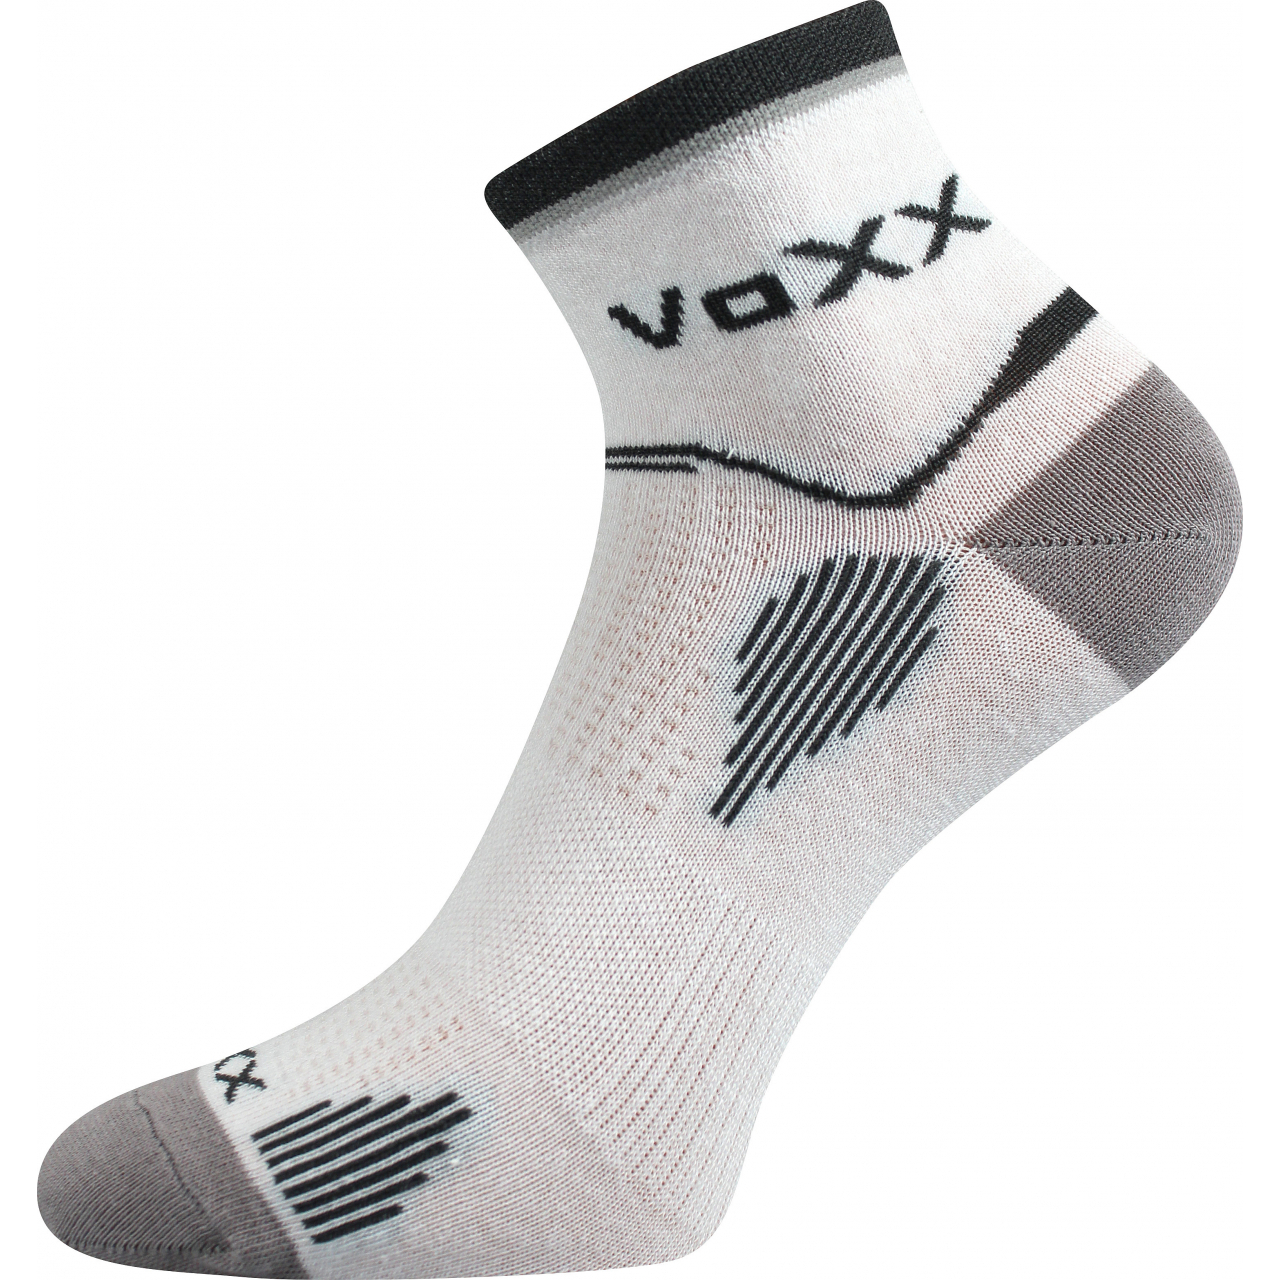 Ponožky unisex sportovní Voxx Sirius - bílé-šedé, 35-38